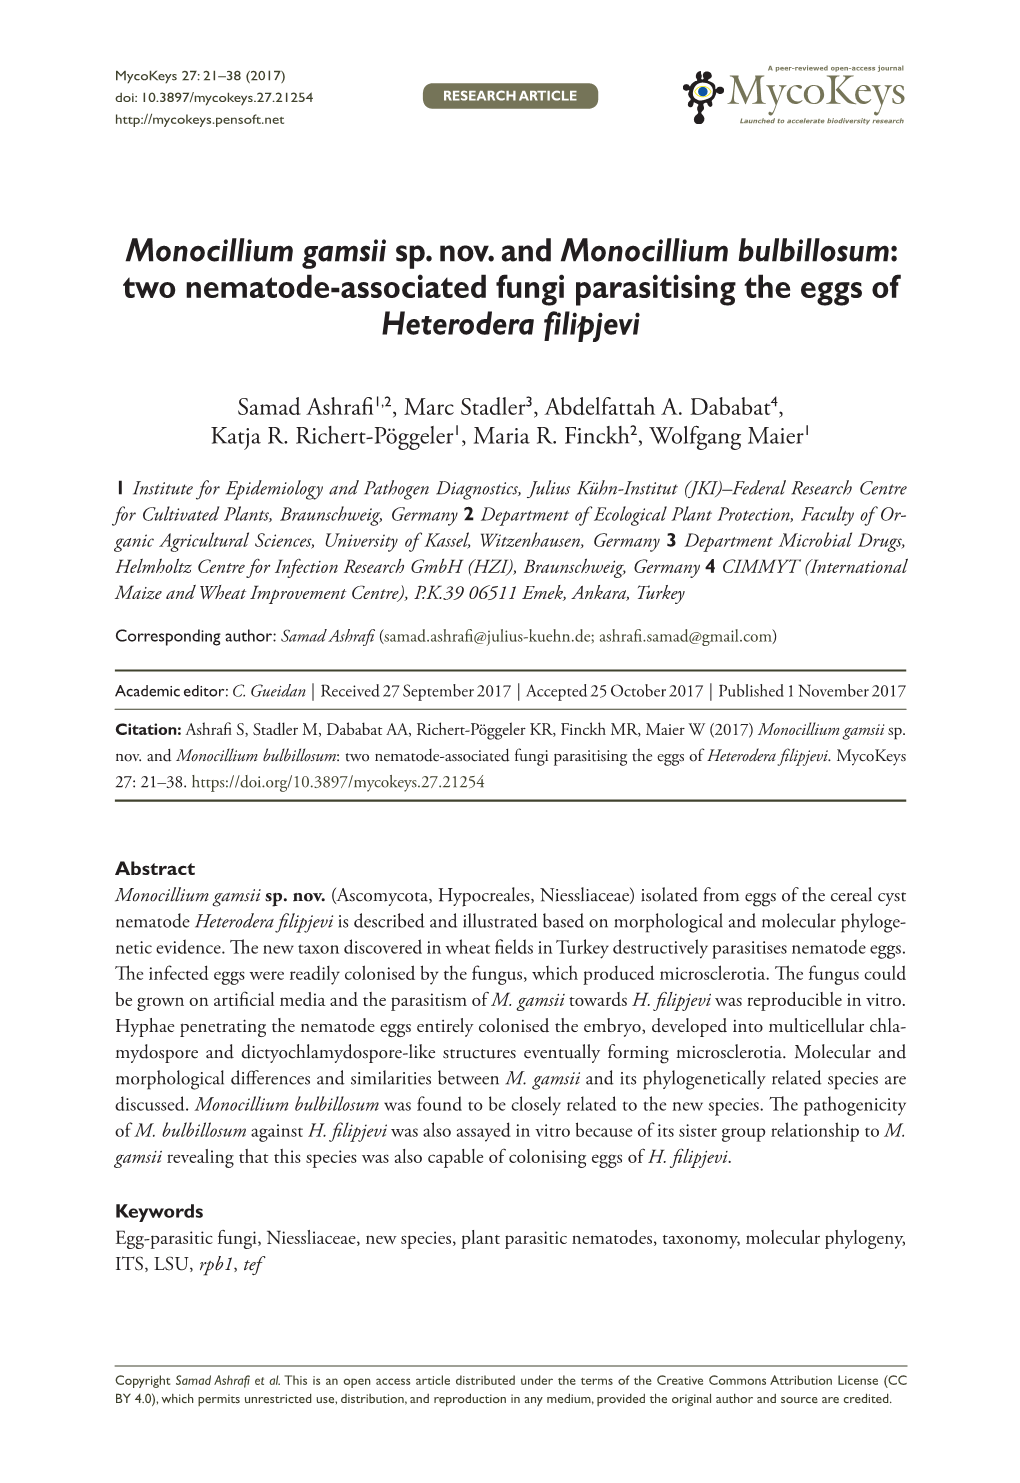 Two Nematode-Associated Fungi Parasitising the Eggs of Heterodera Filipjevi